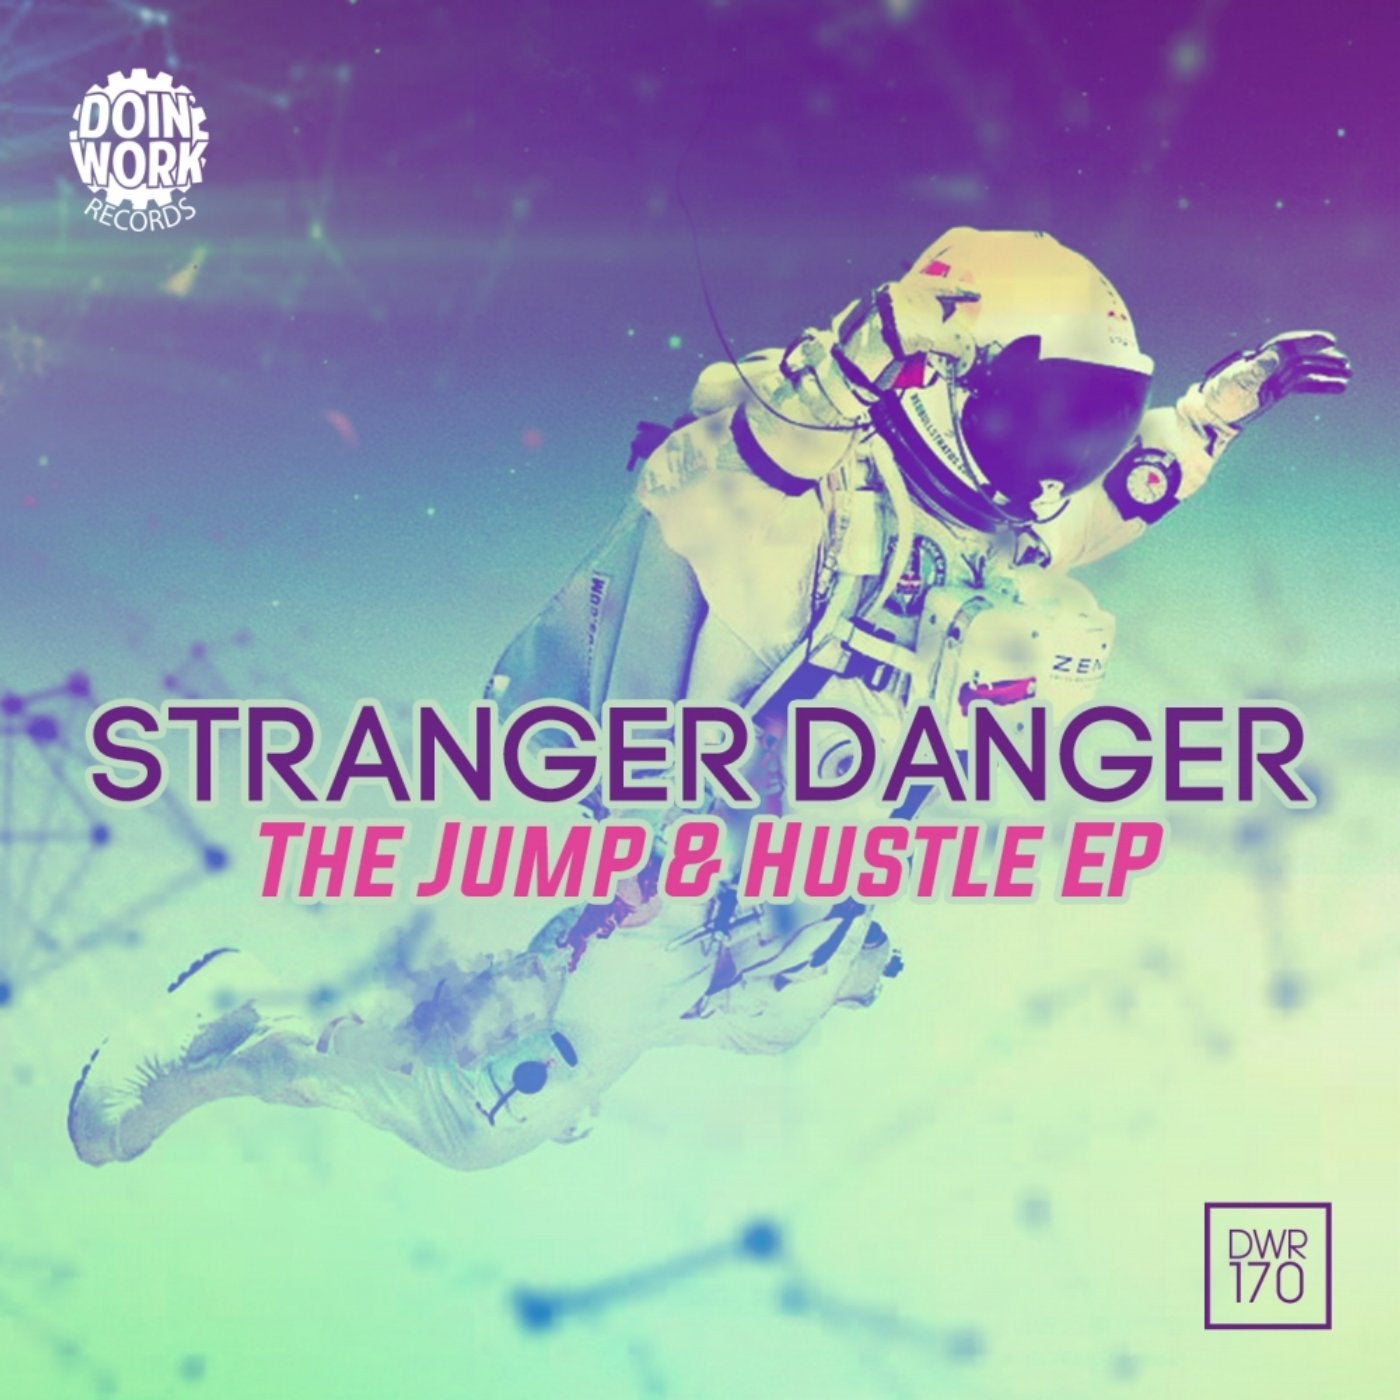 Jump and Hustle EP